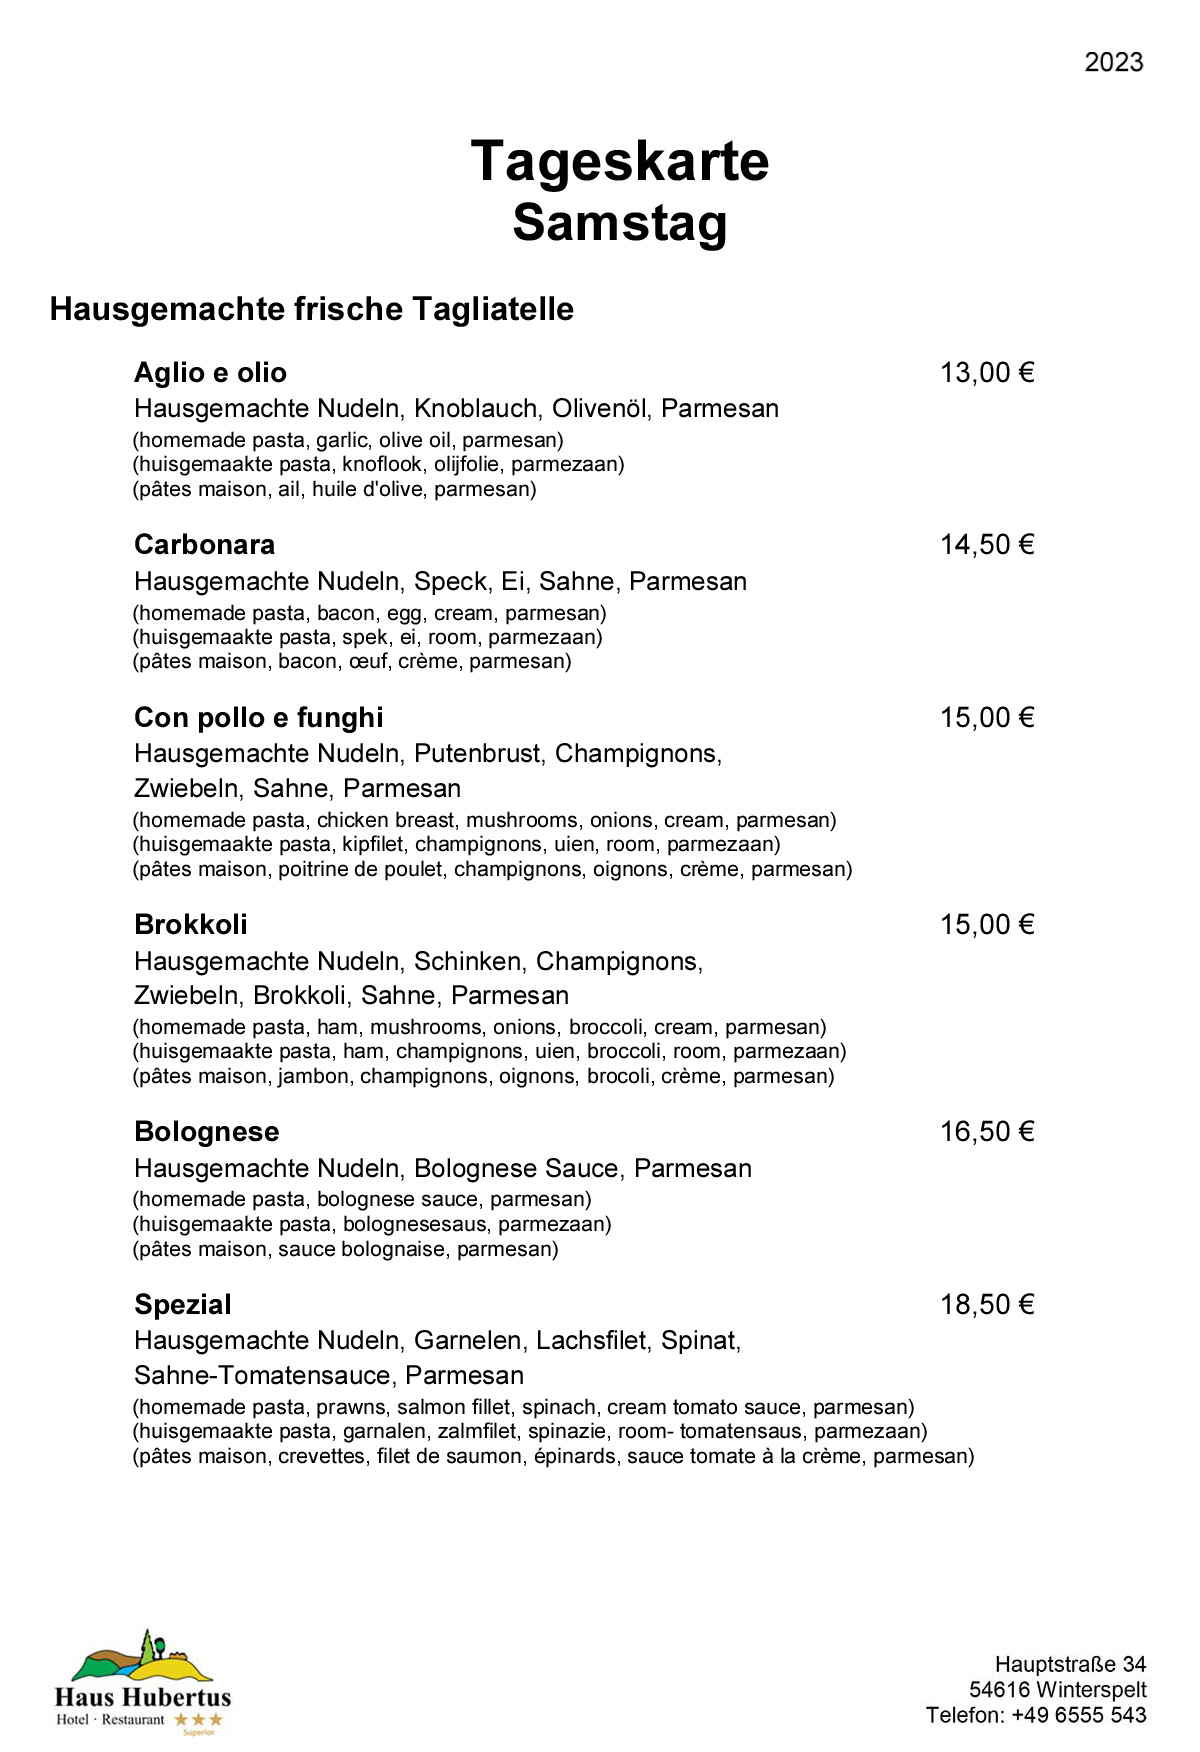 Hotel - Restaurant Haus Hubertus - Speisekarte 02/2023 - Tageskarte / Samstag